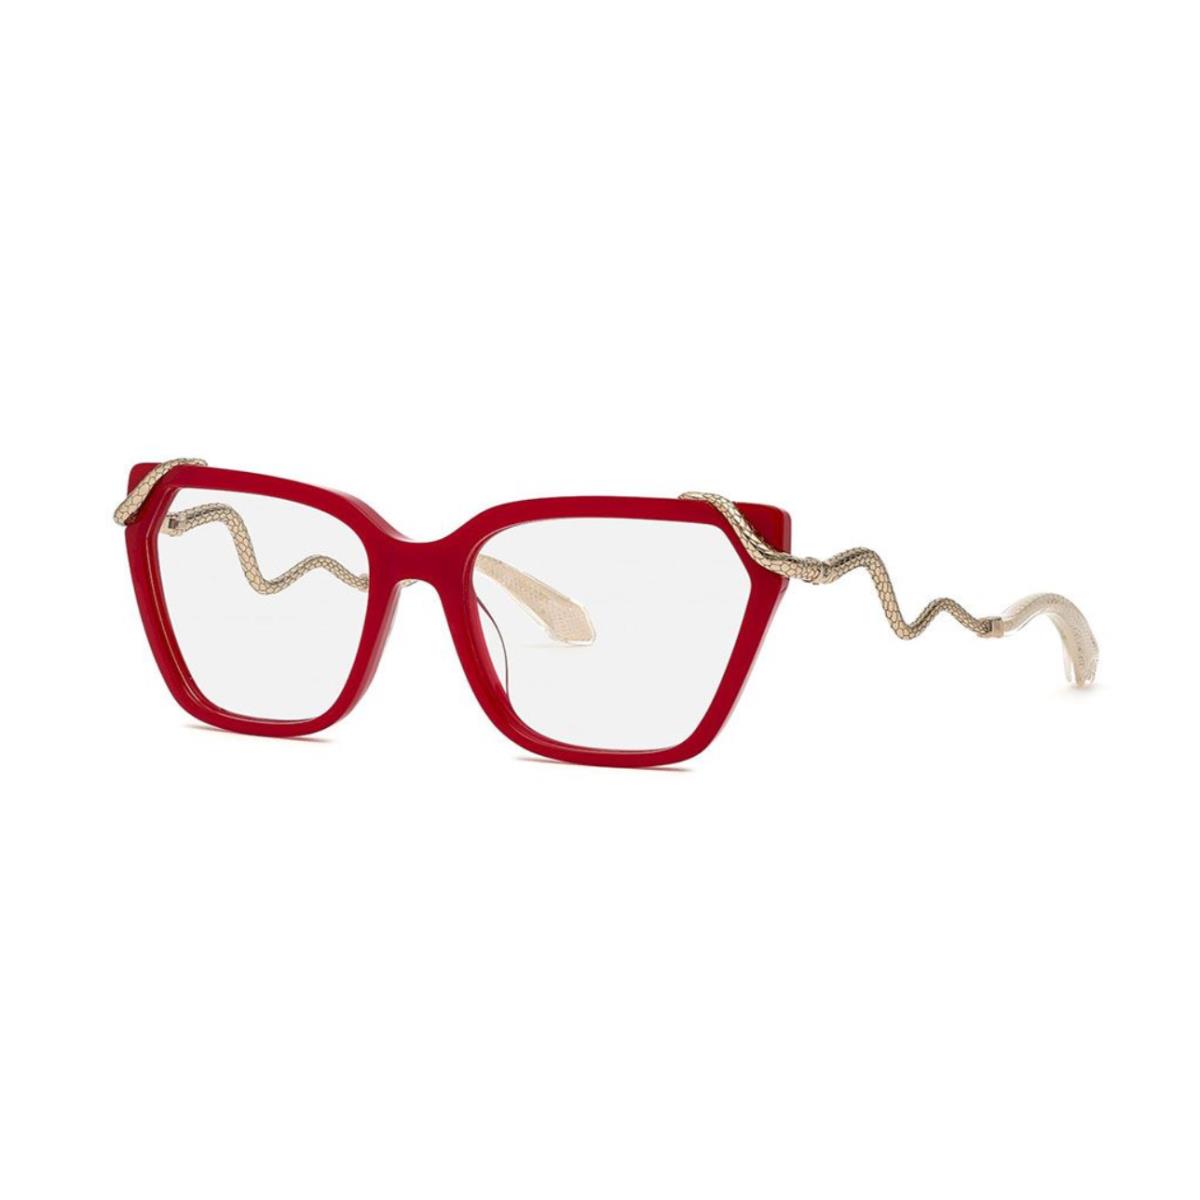 Roberto Cavalli Eyeglasses VRC020 9EZY Red Frame 55MM Rx-able